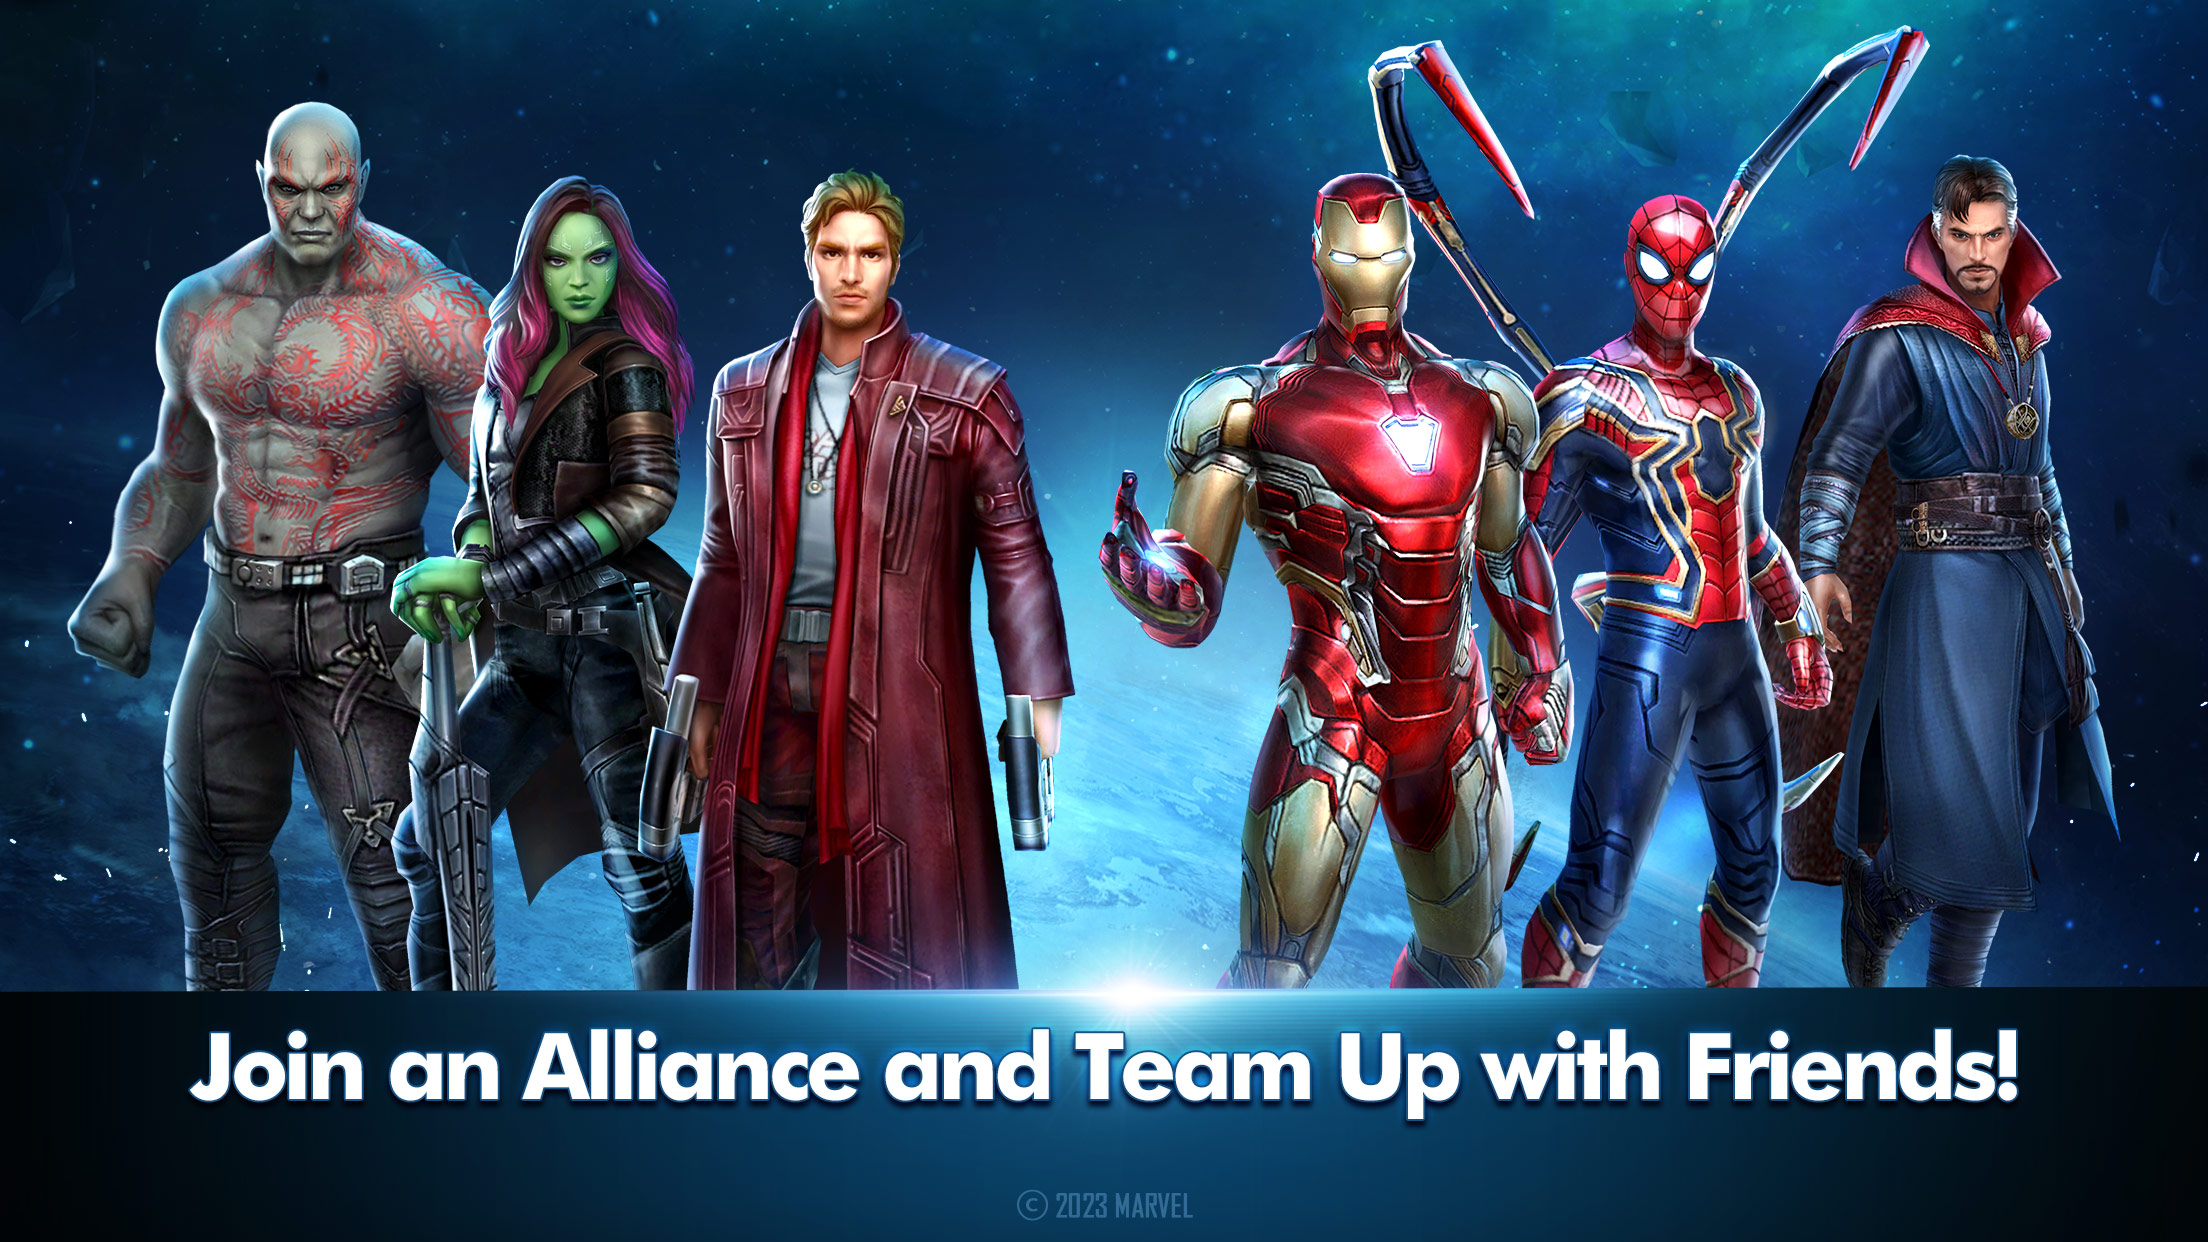 Download Avengers Alliance for PC/Avengers Alliance on PC